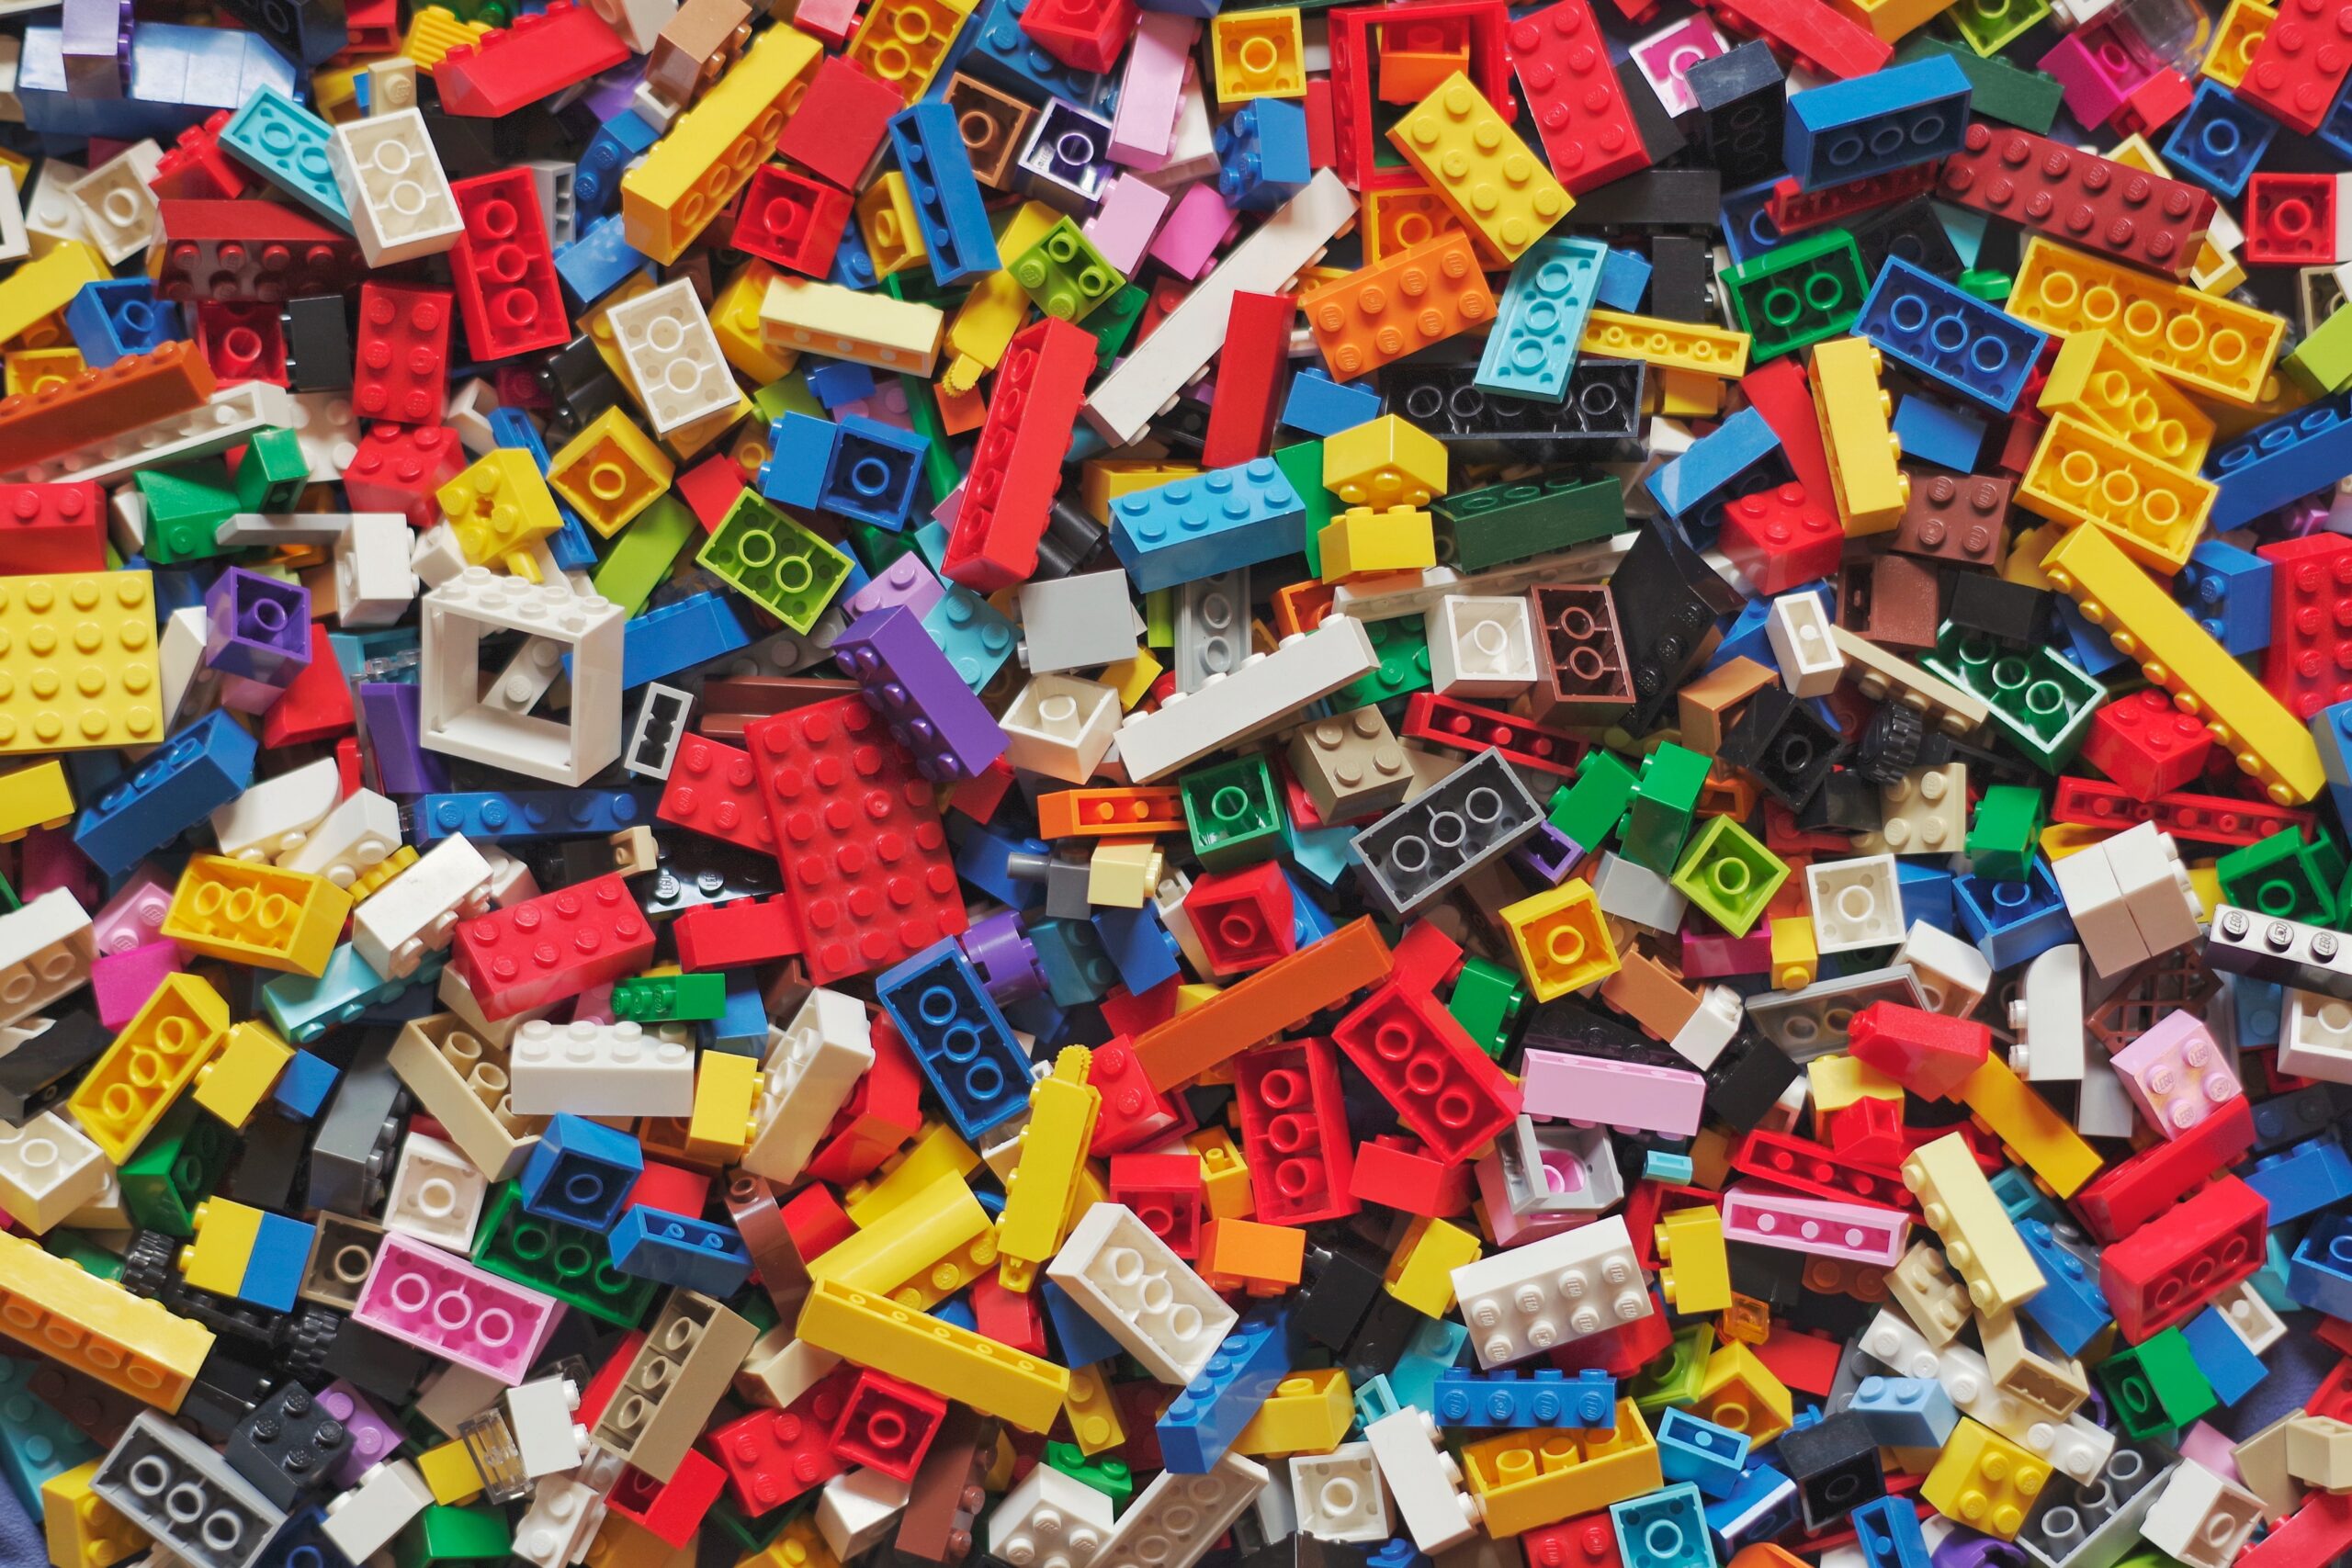 A pile of Lego blocks